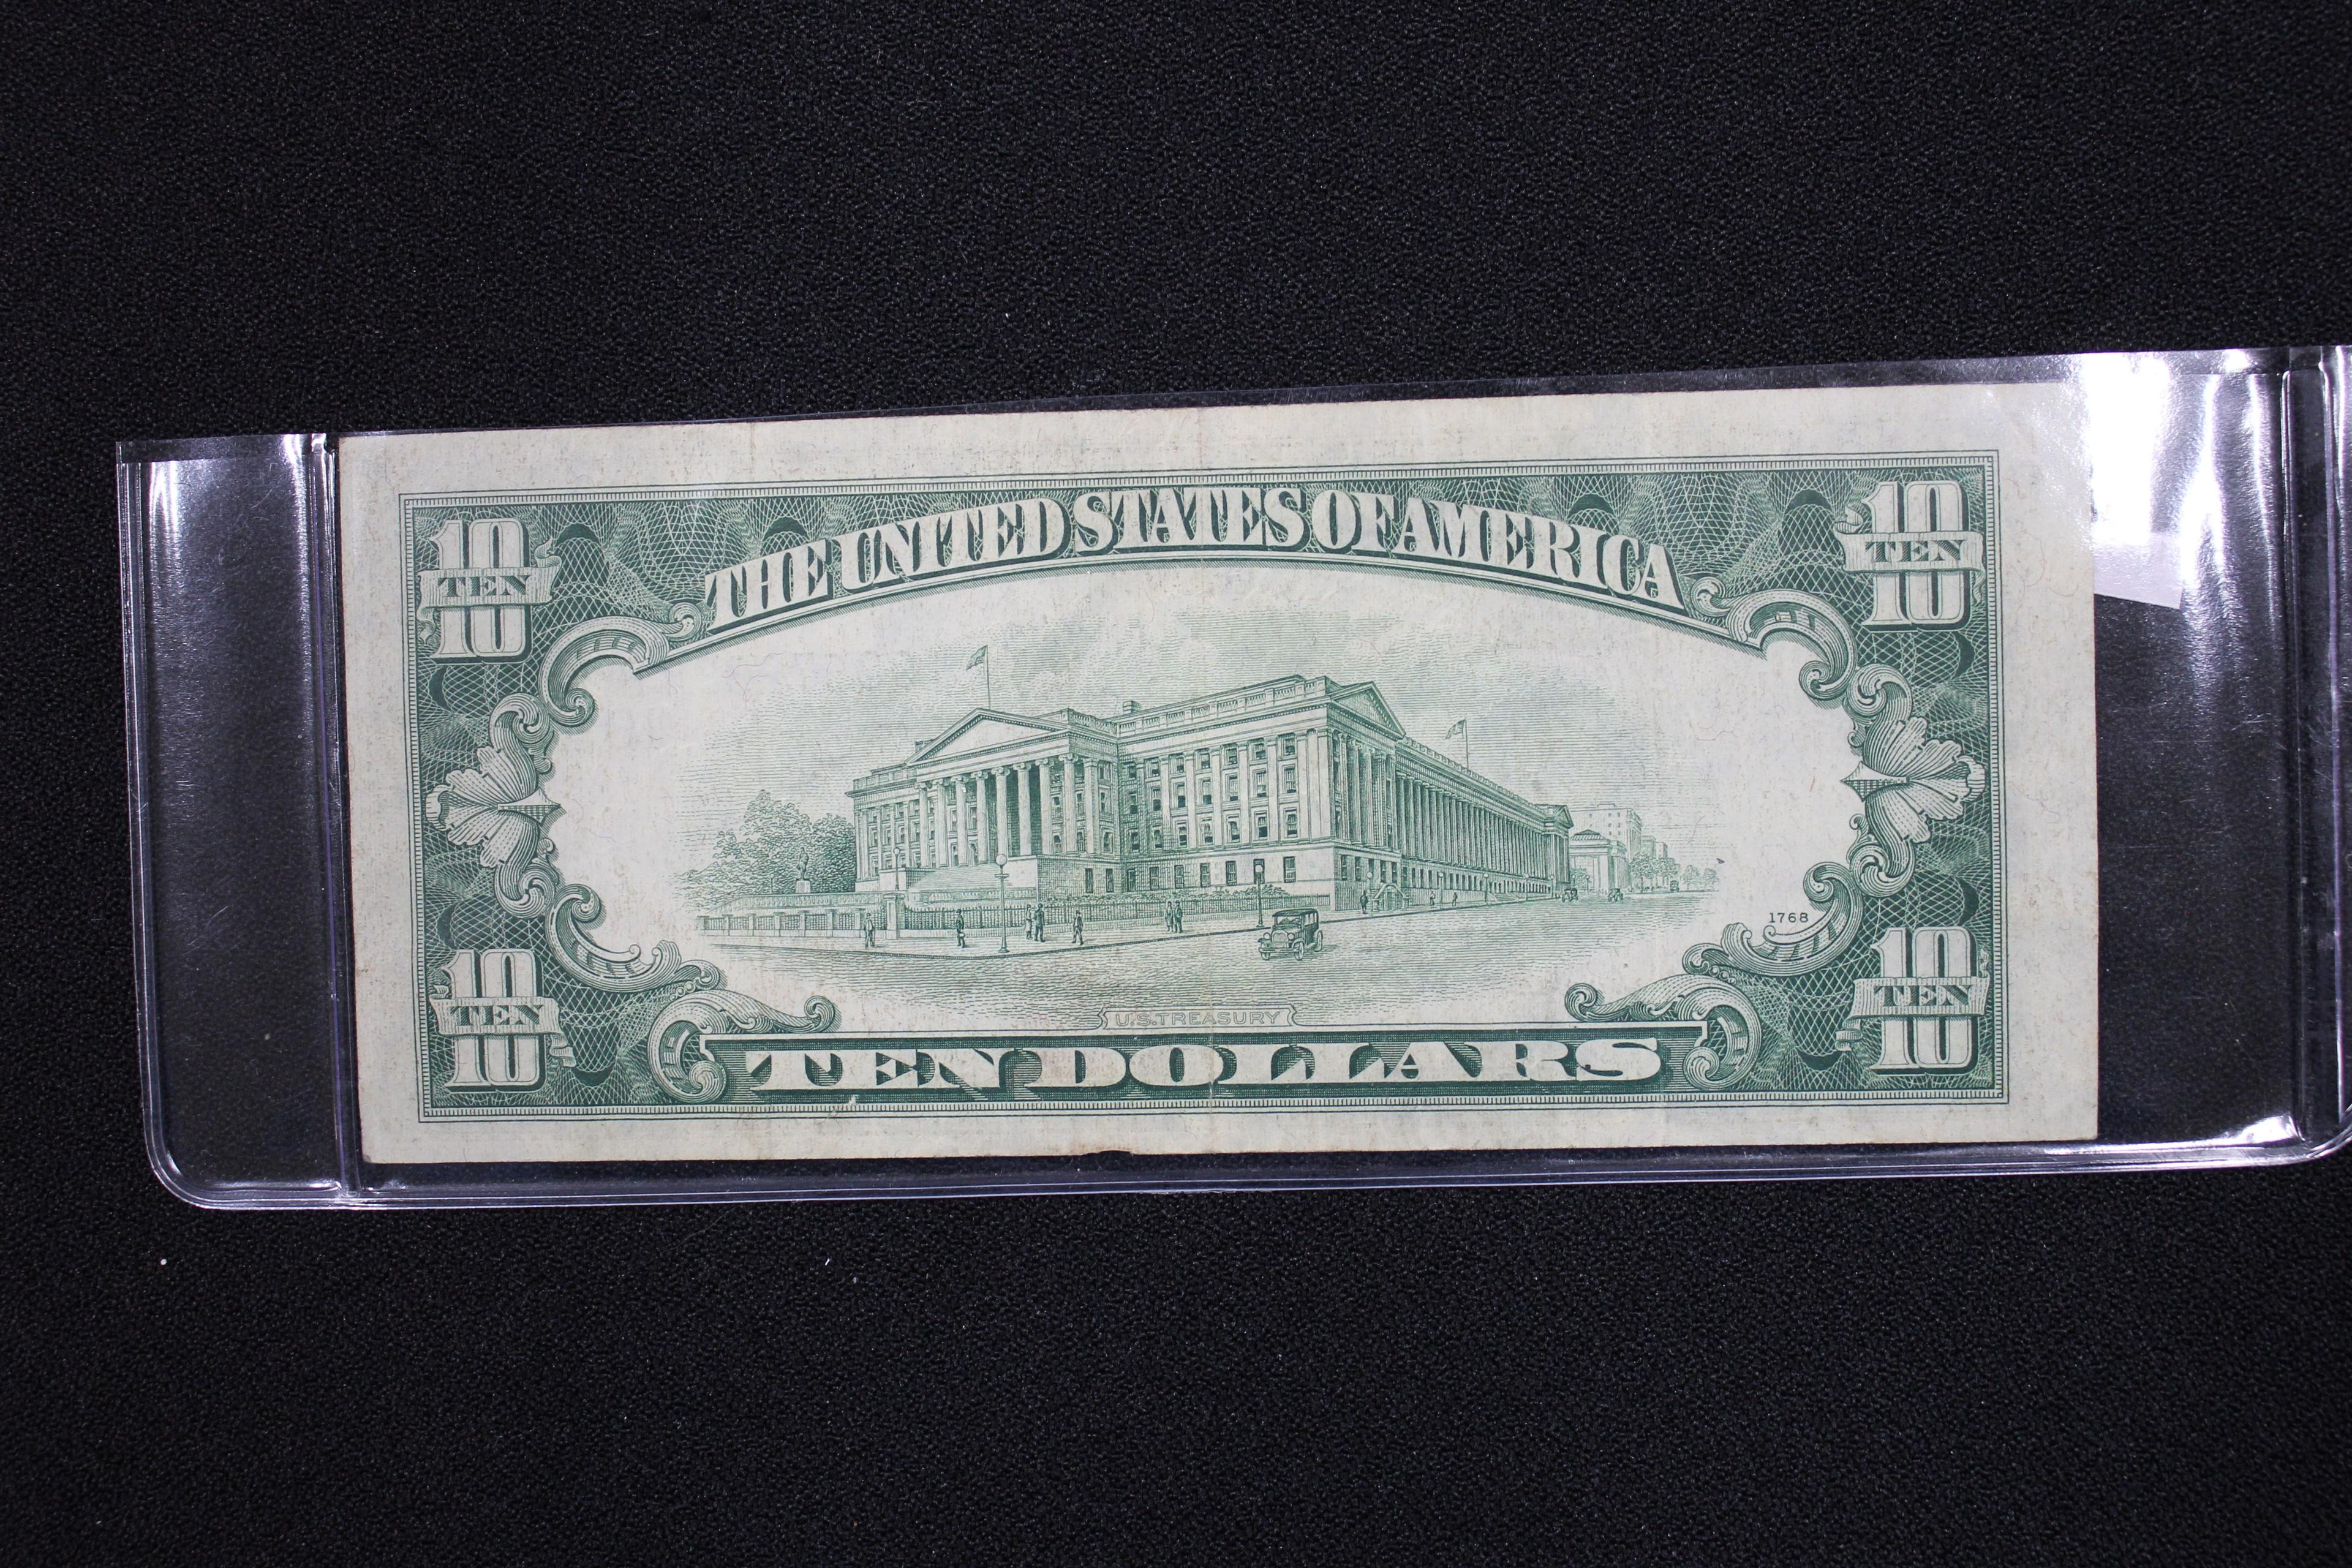 1950-C Ten Dollar Bill; VF